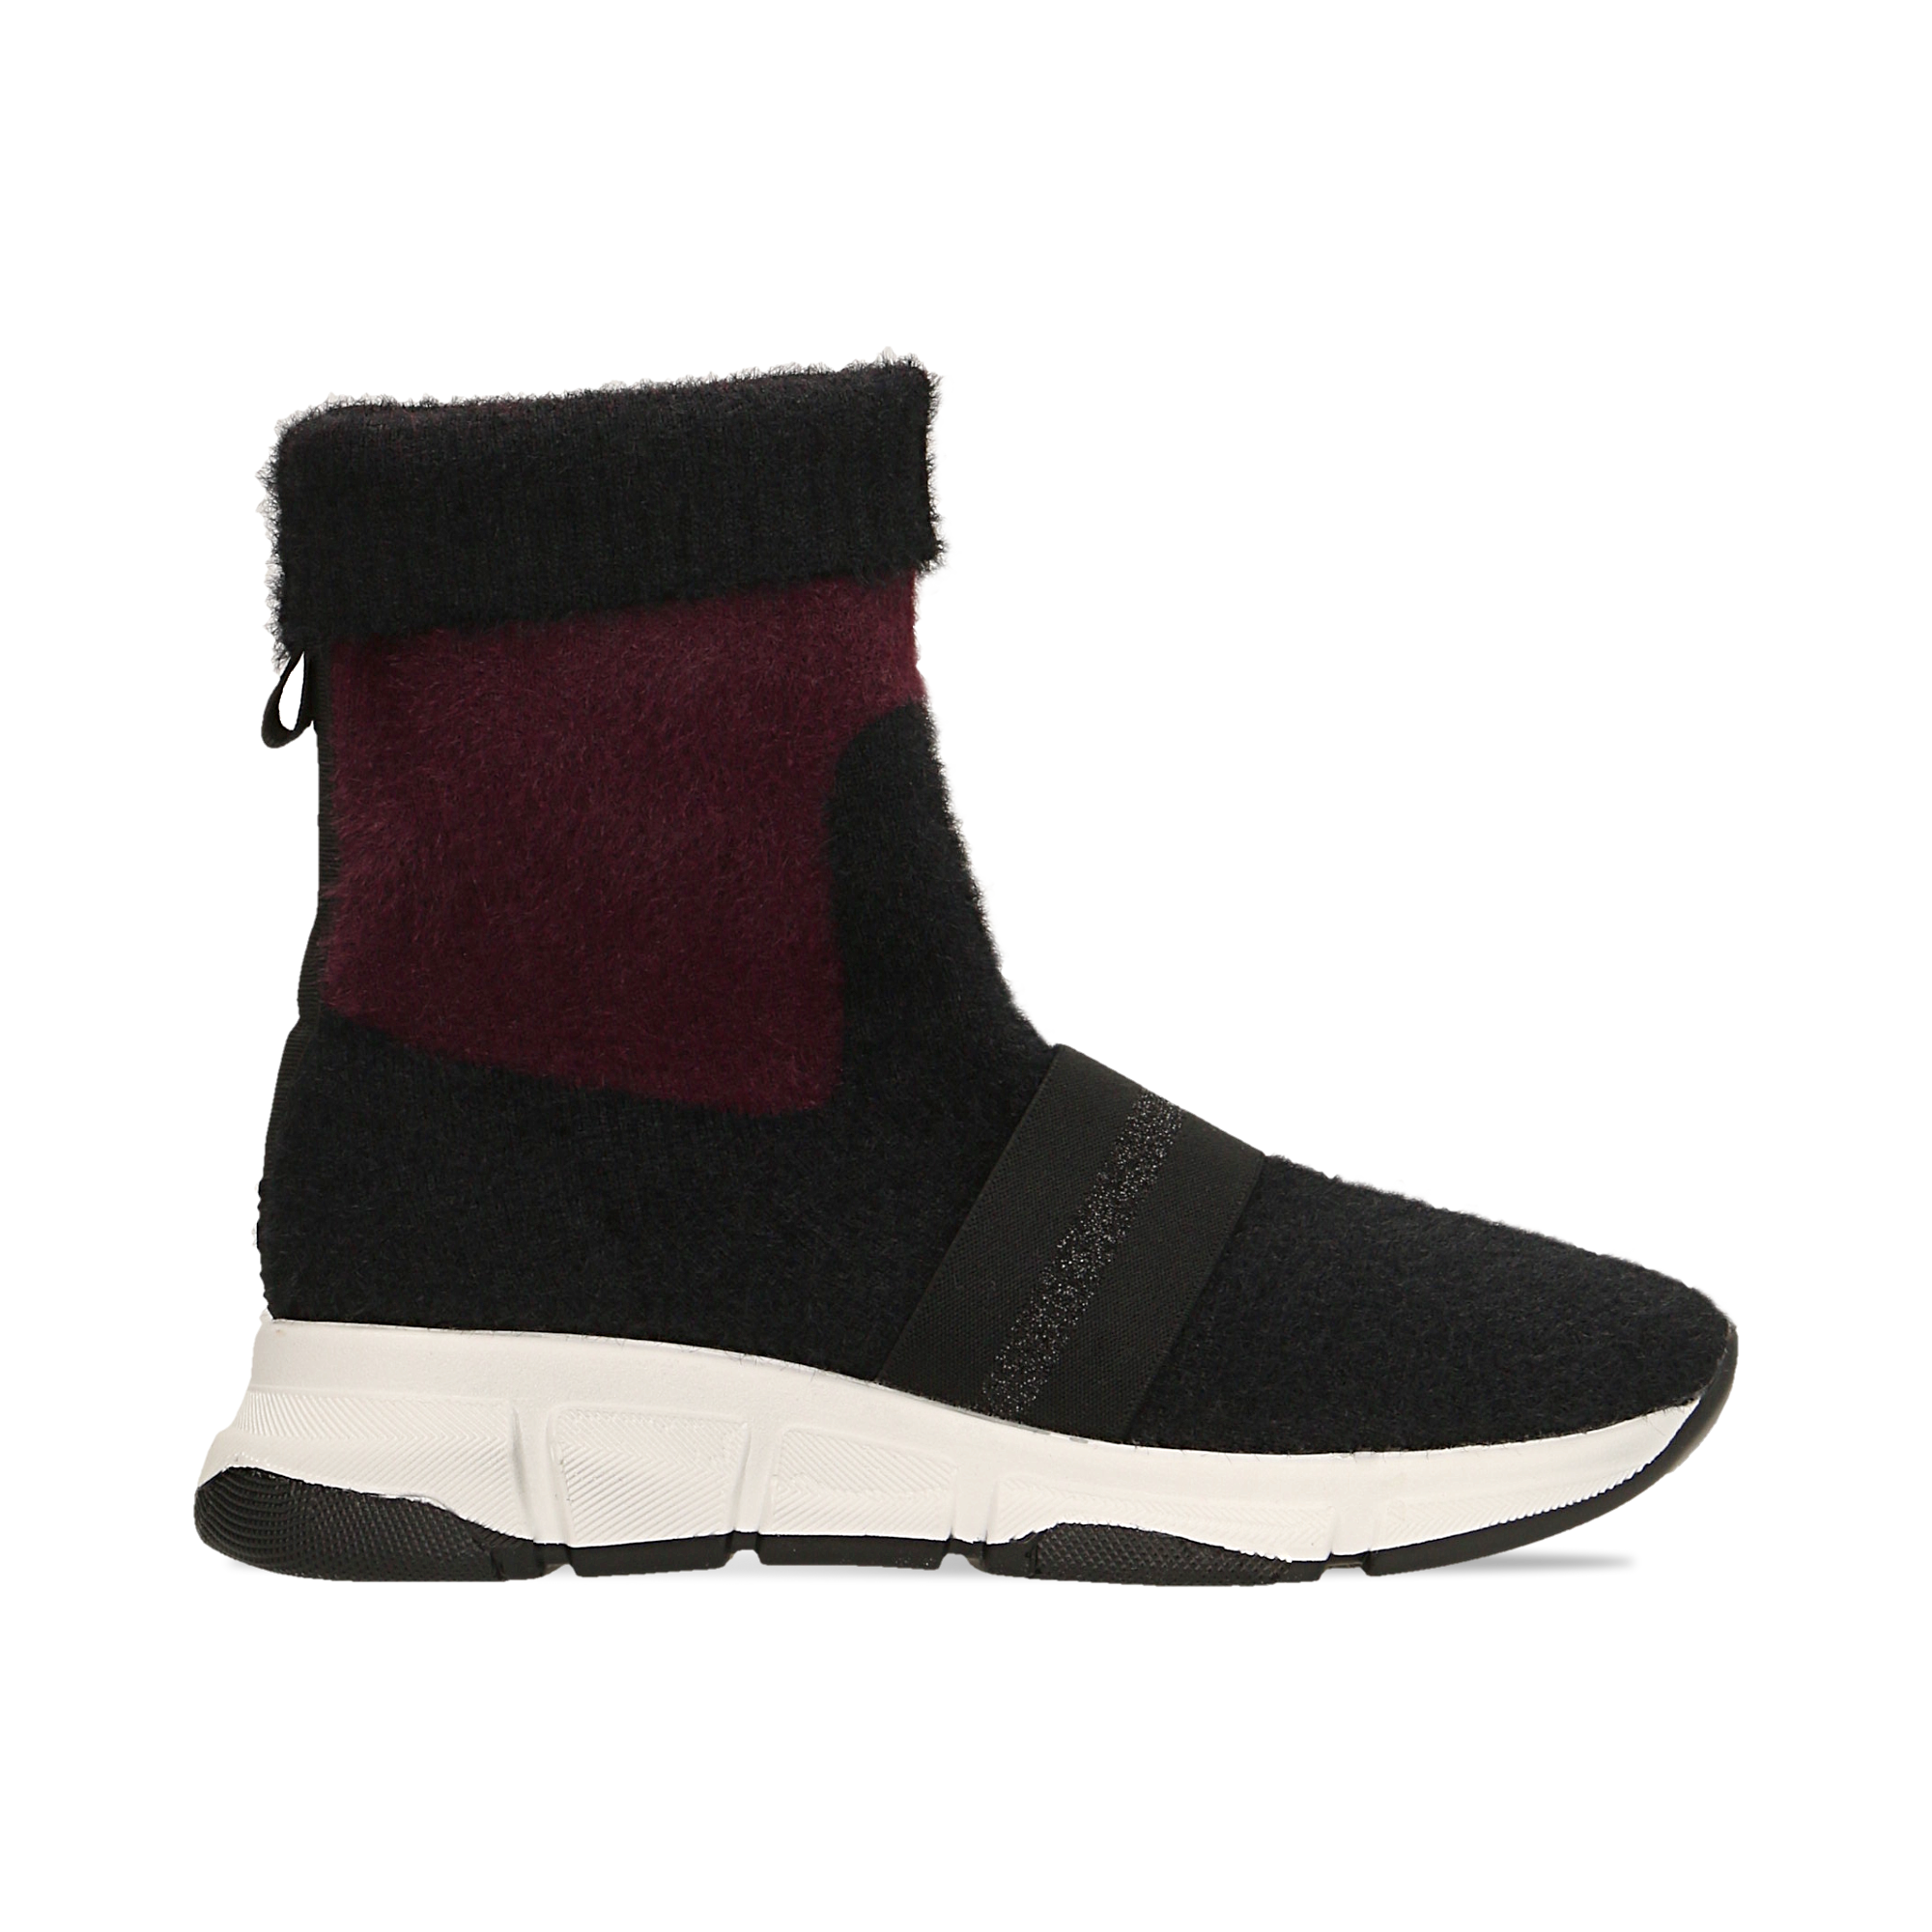 Sneakers nero-rosse sock boots con suola in gomma bianca